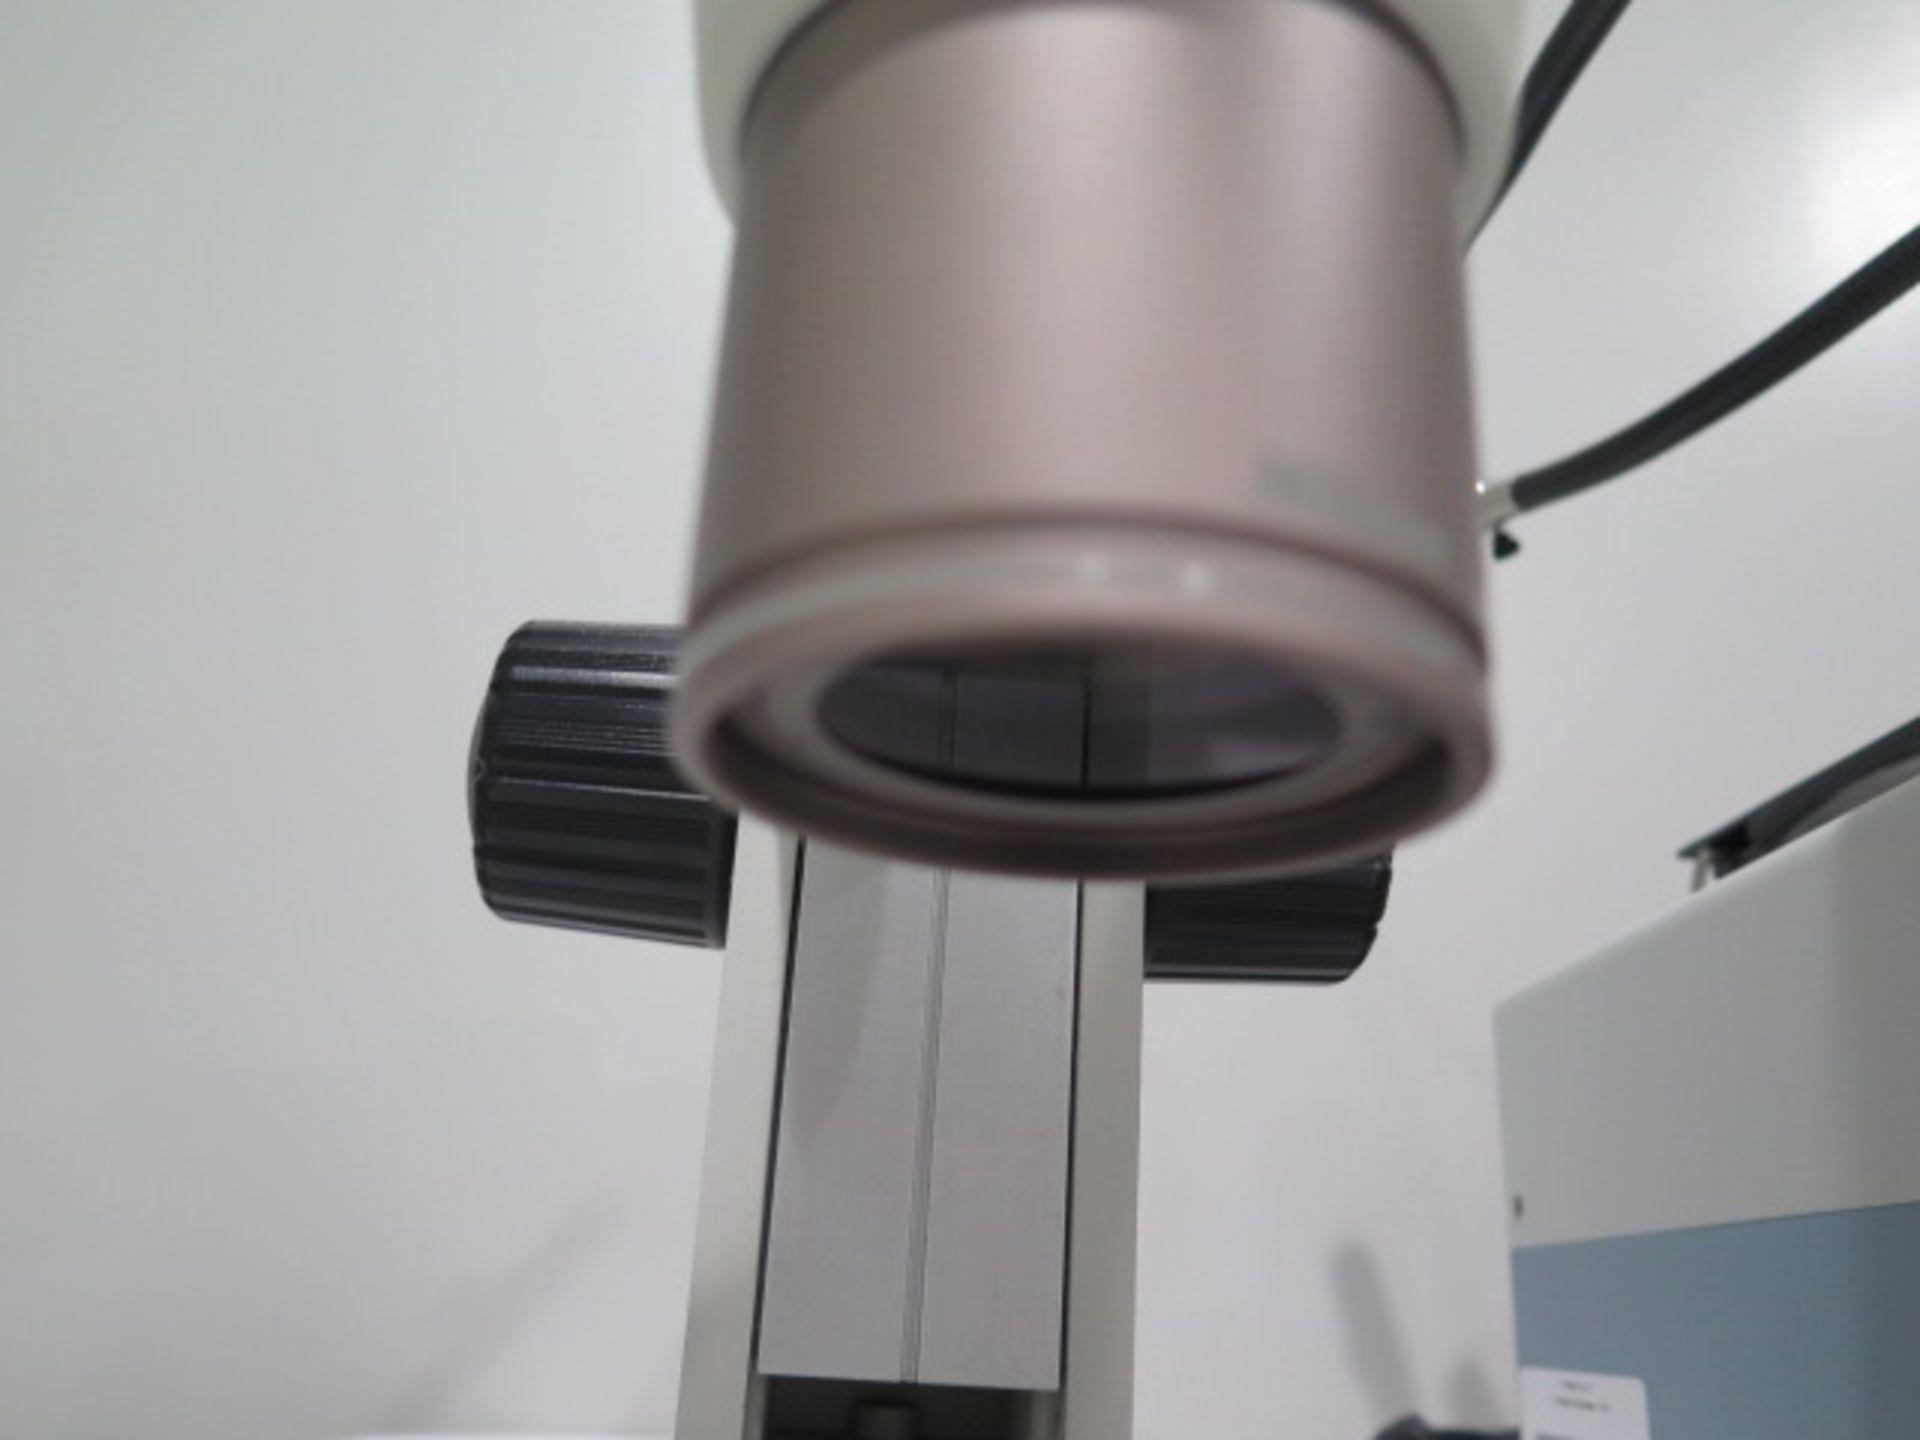 Nikon SMZ800 Monocular Microscope w/ Phototube Video Splitter Port (NO CAMERA), SOLD AS IS - Image 6 of 10